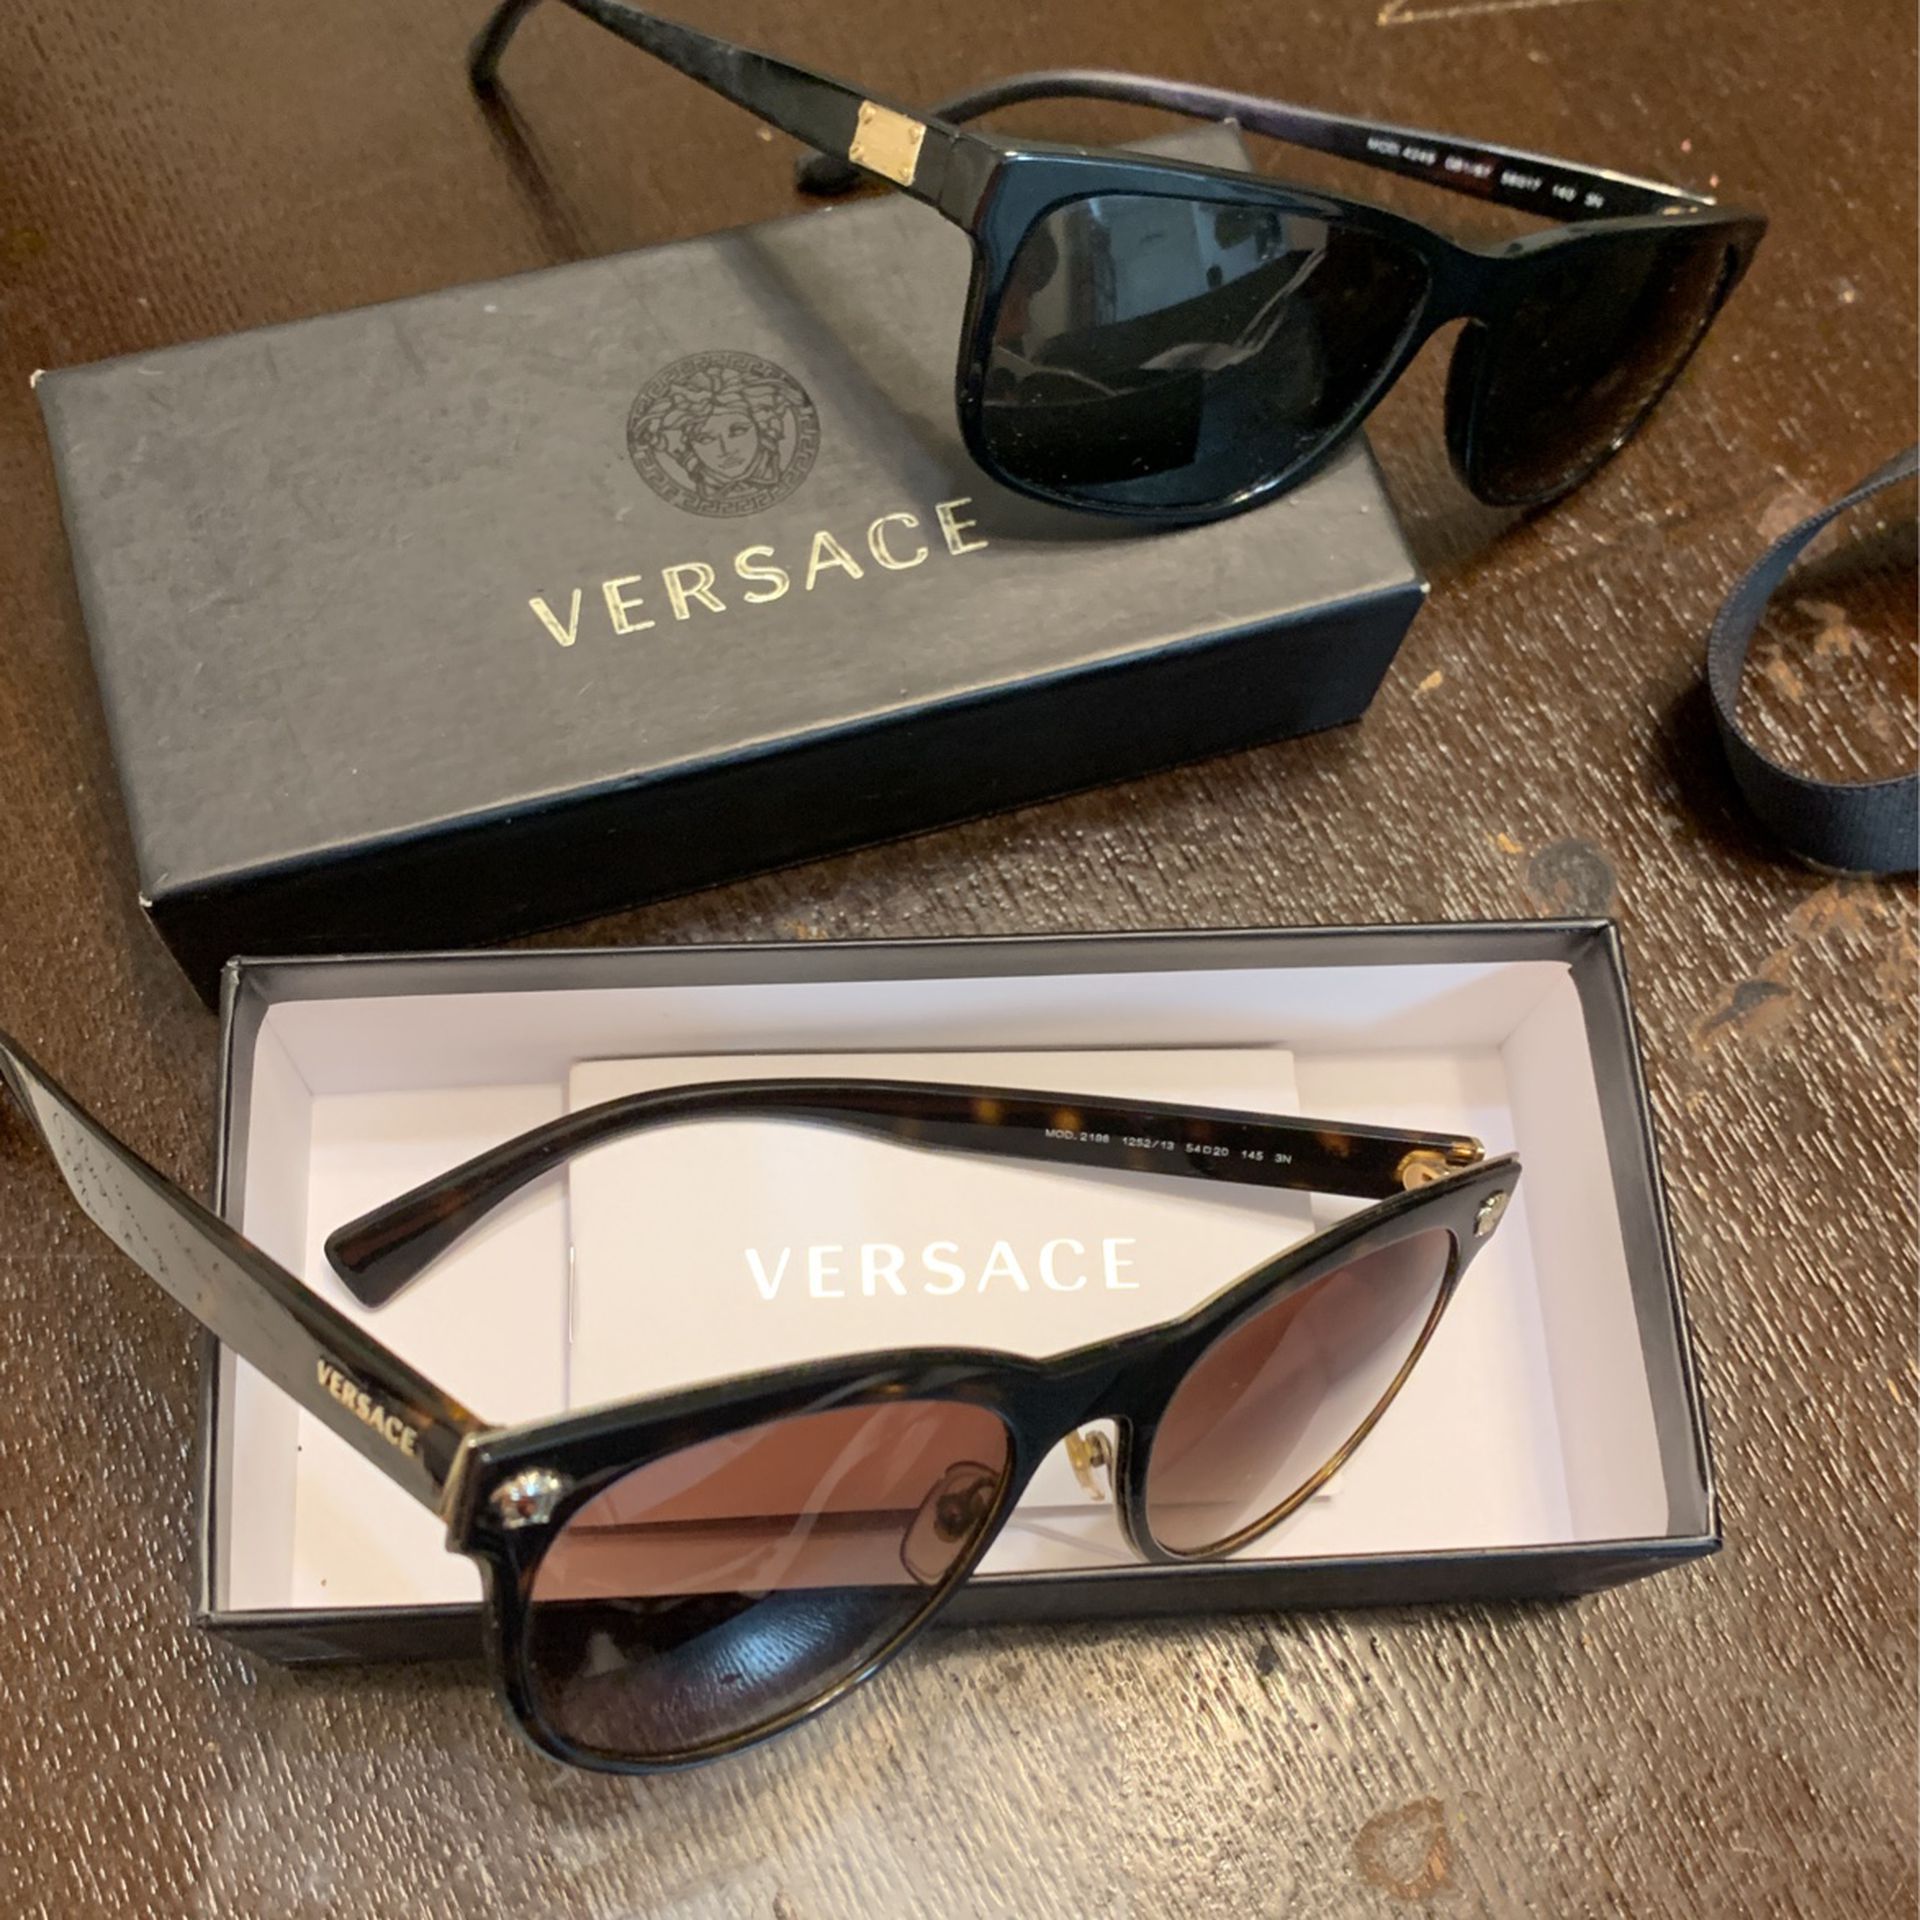 Versace/Gucci Sunglasses All Glasses for $250